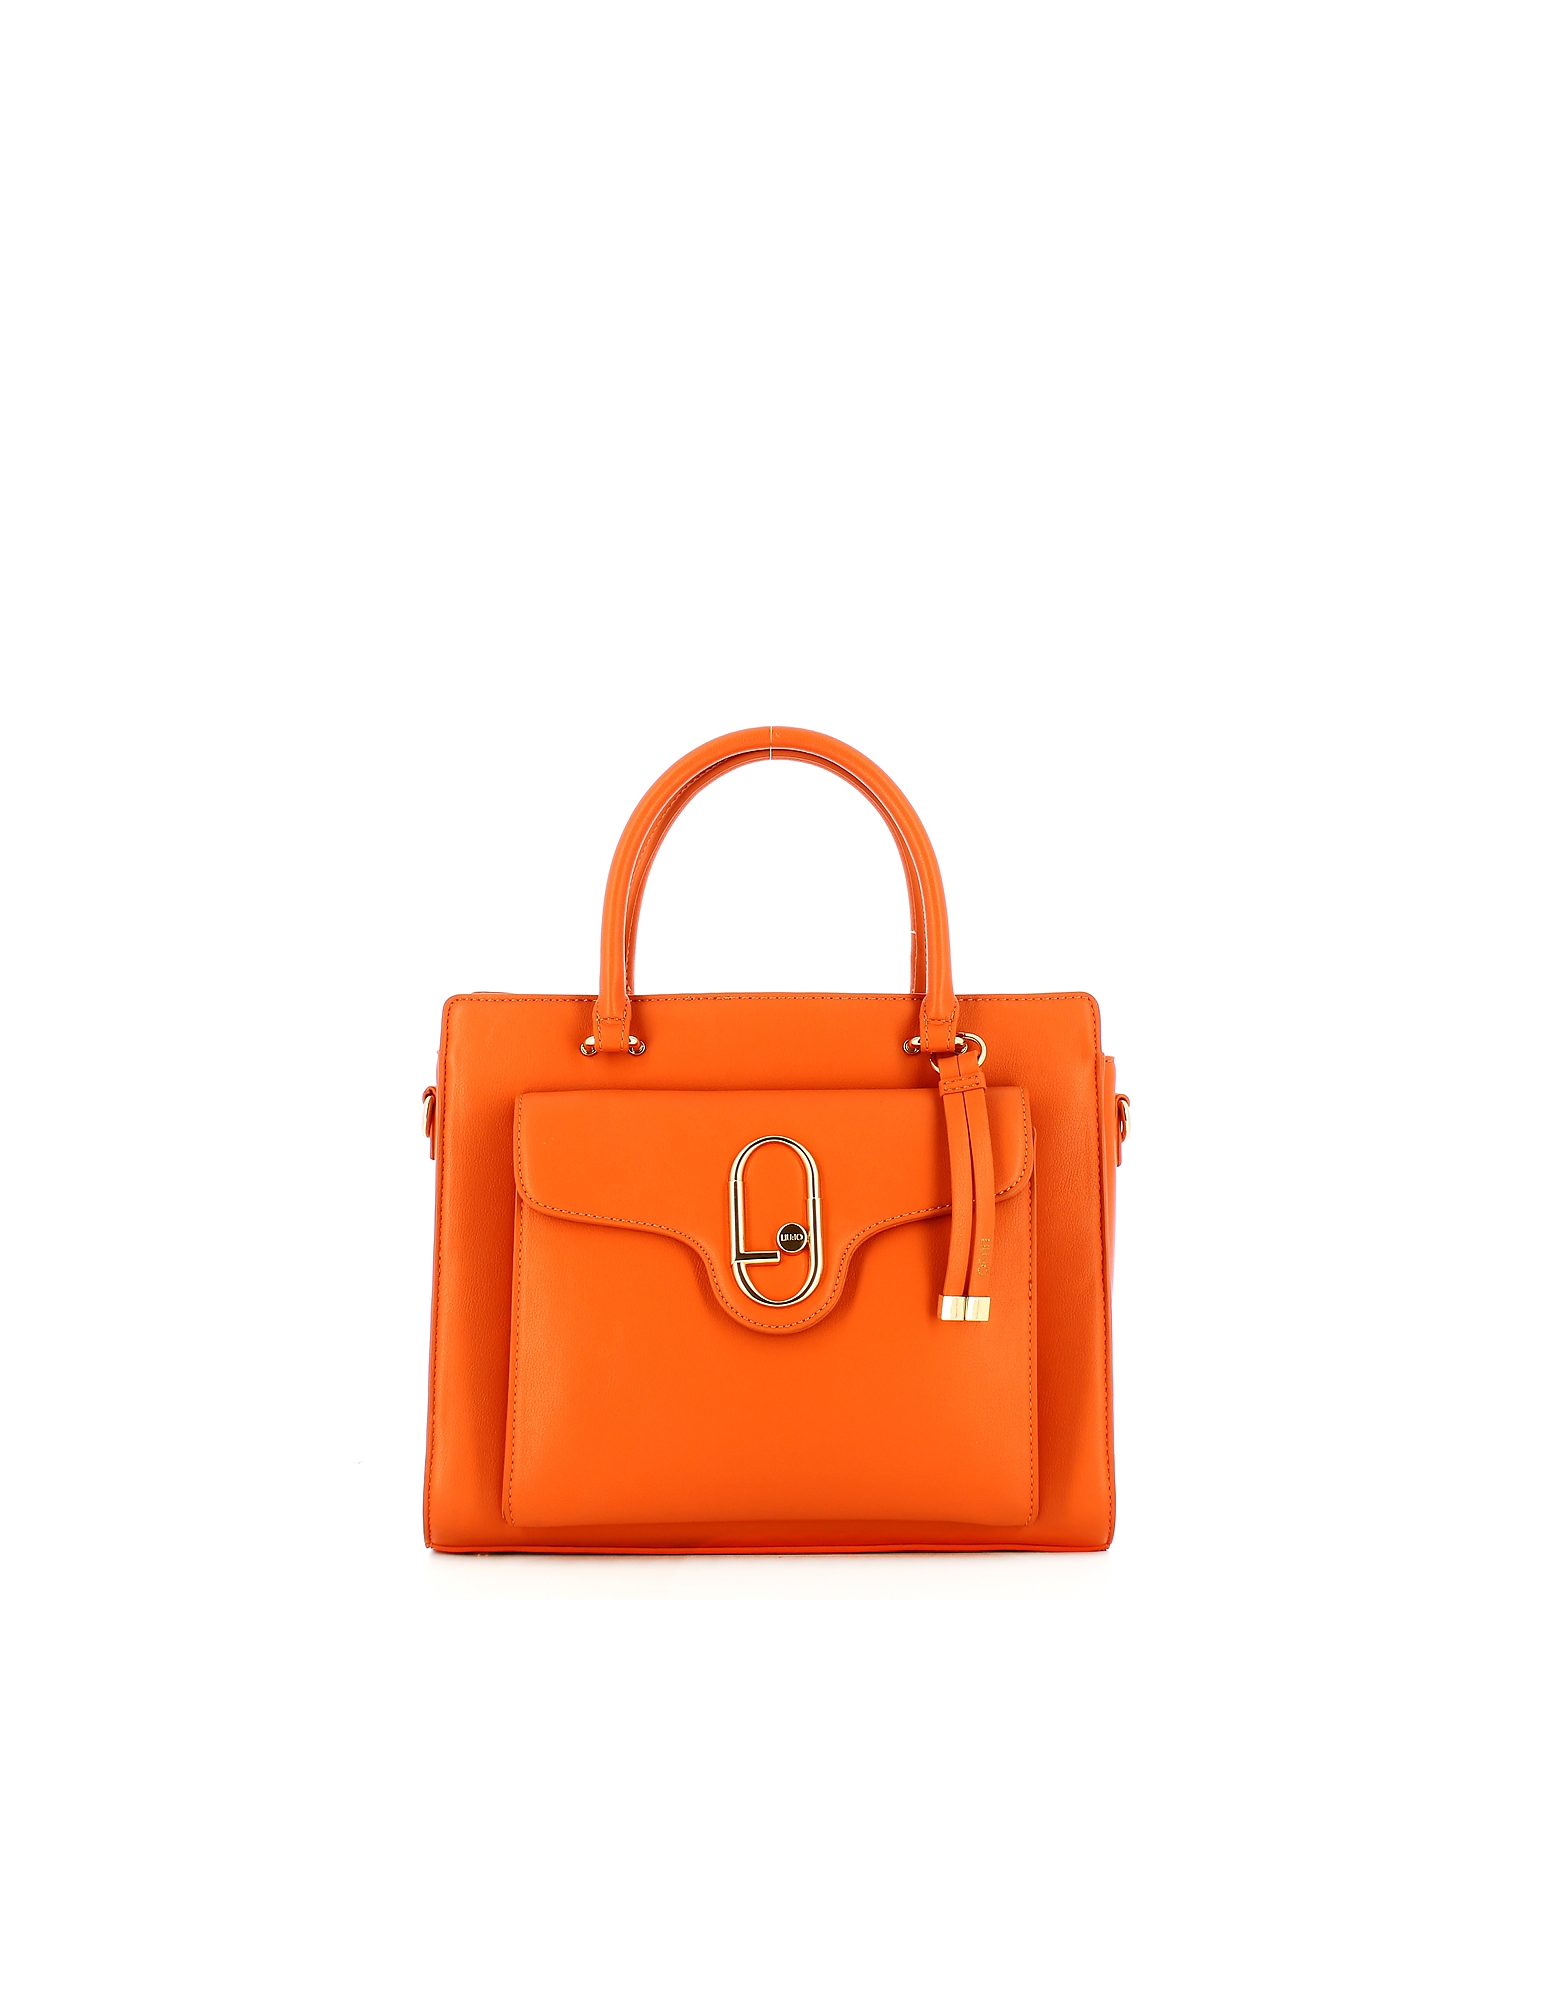 Liu •jo Designer Handbags Women's Bag In Orange